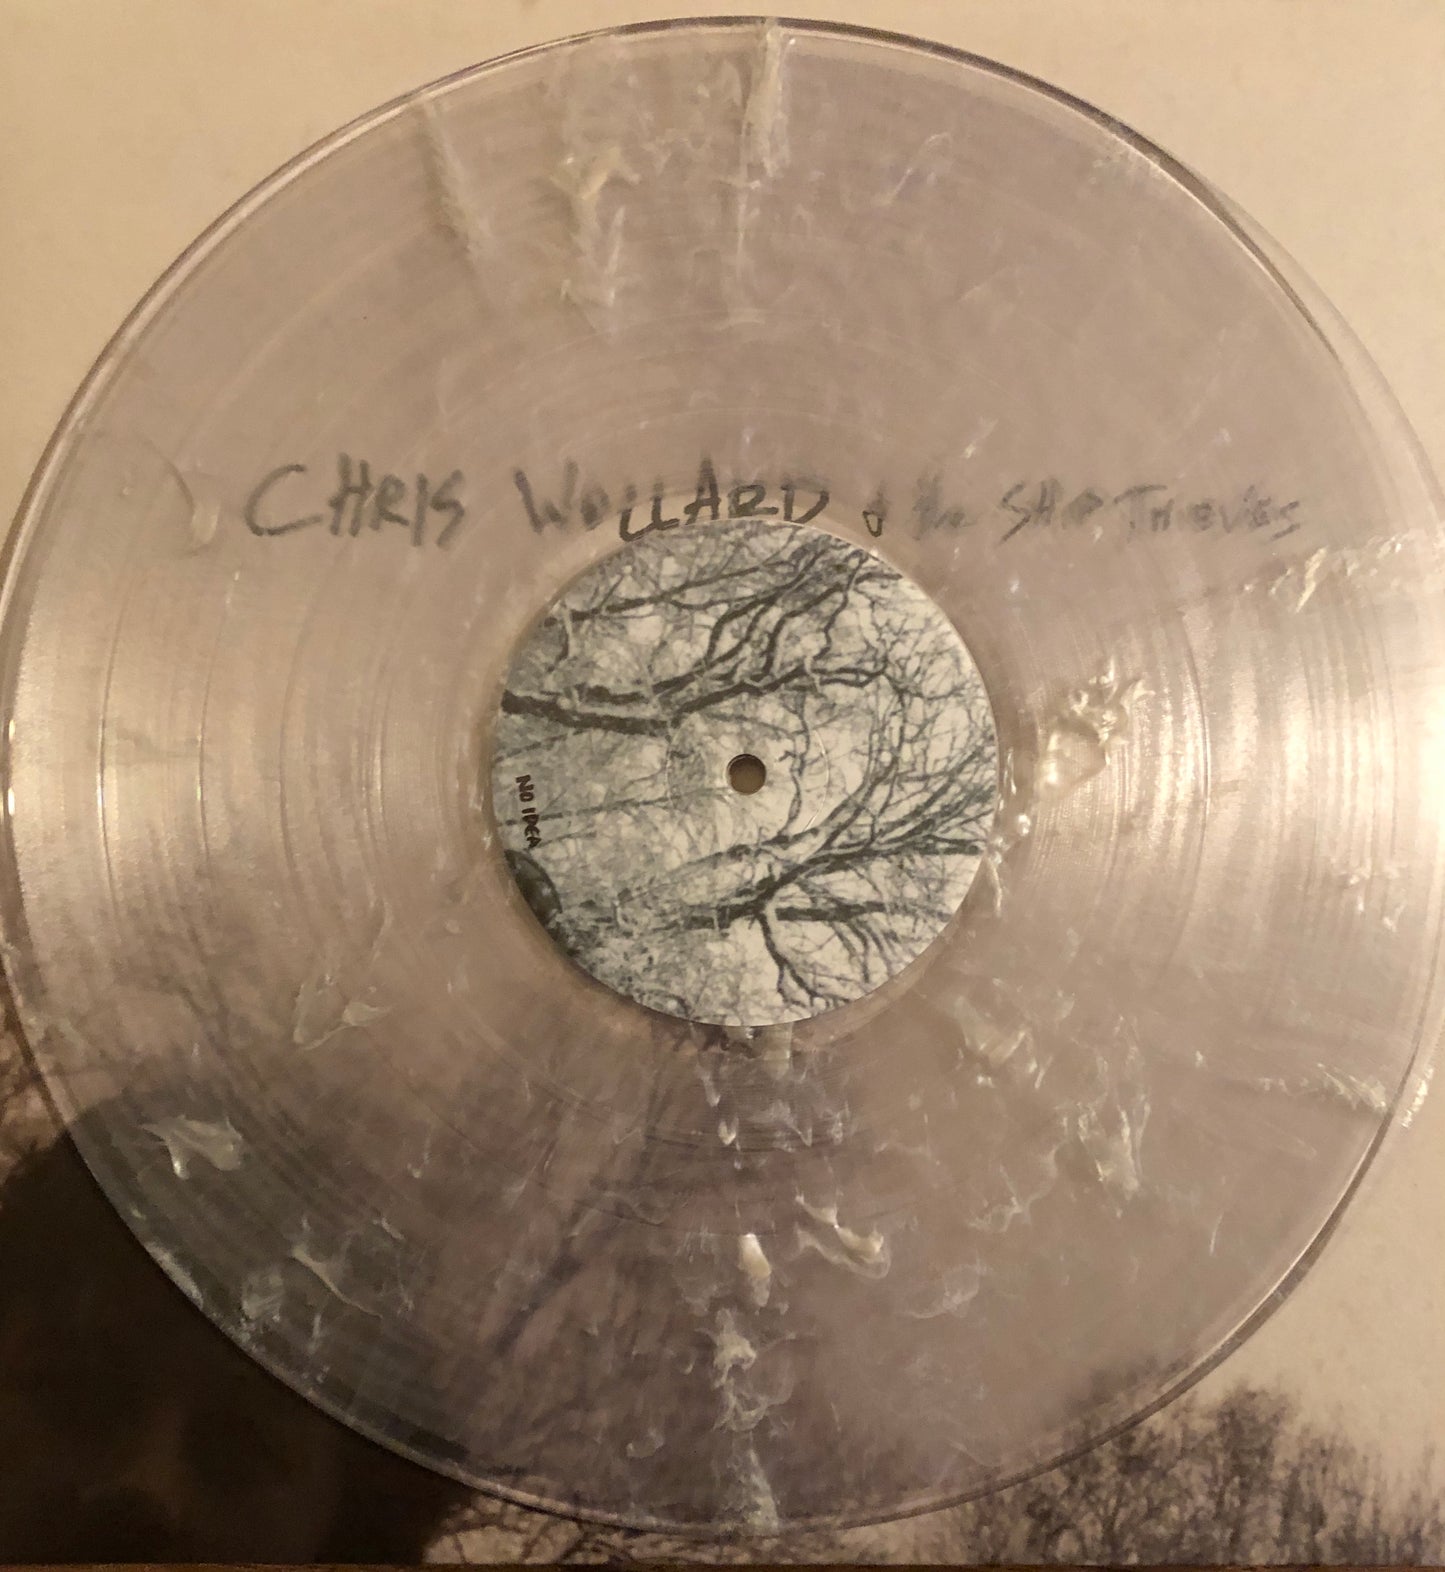 CHRIS WOLLARD & THE SHIP THIEVES "Chris Wollard & The Ship Thieves" (LTD to 110)